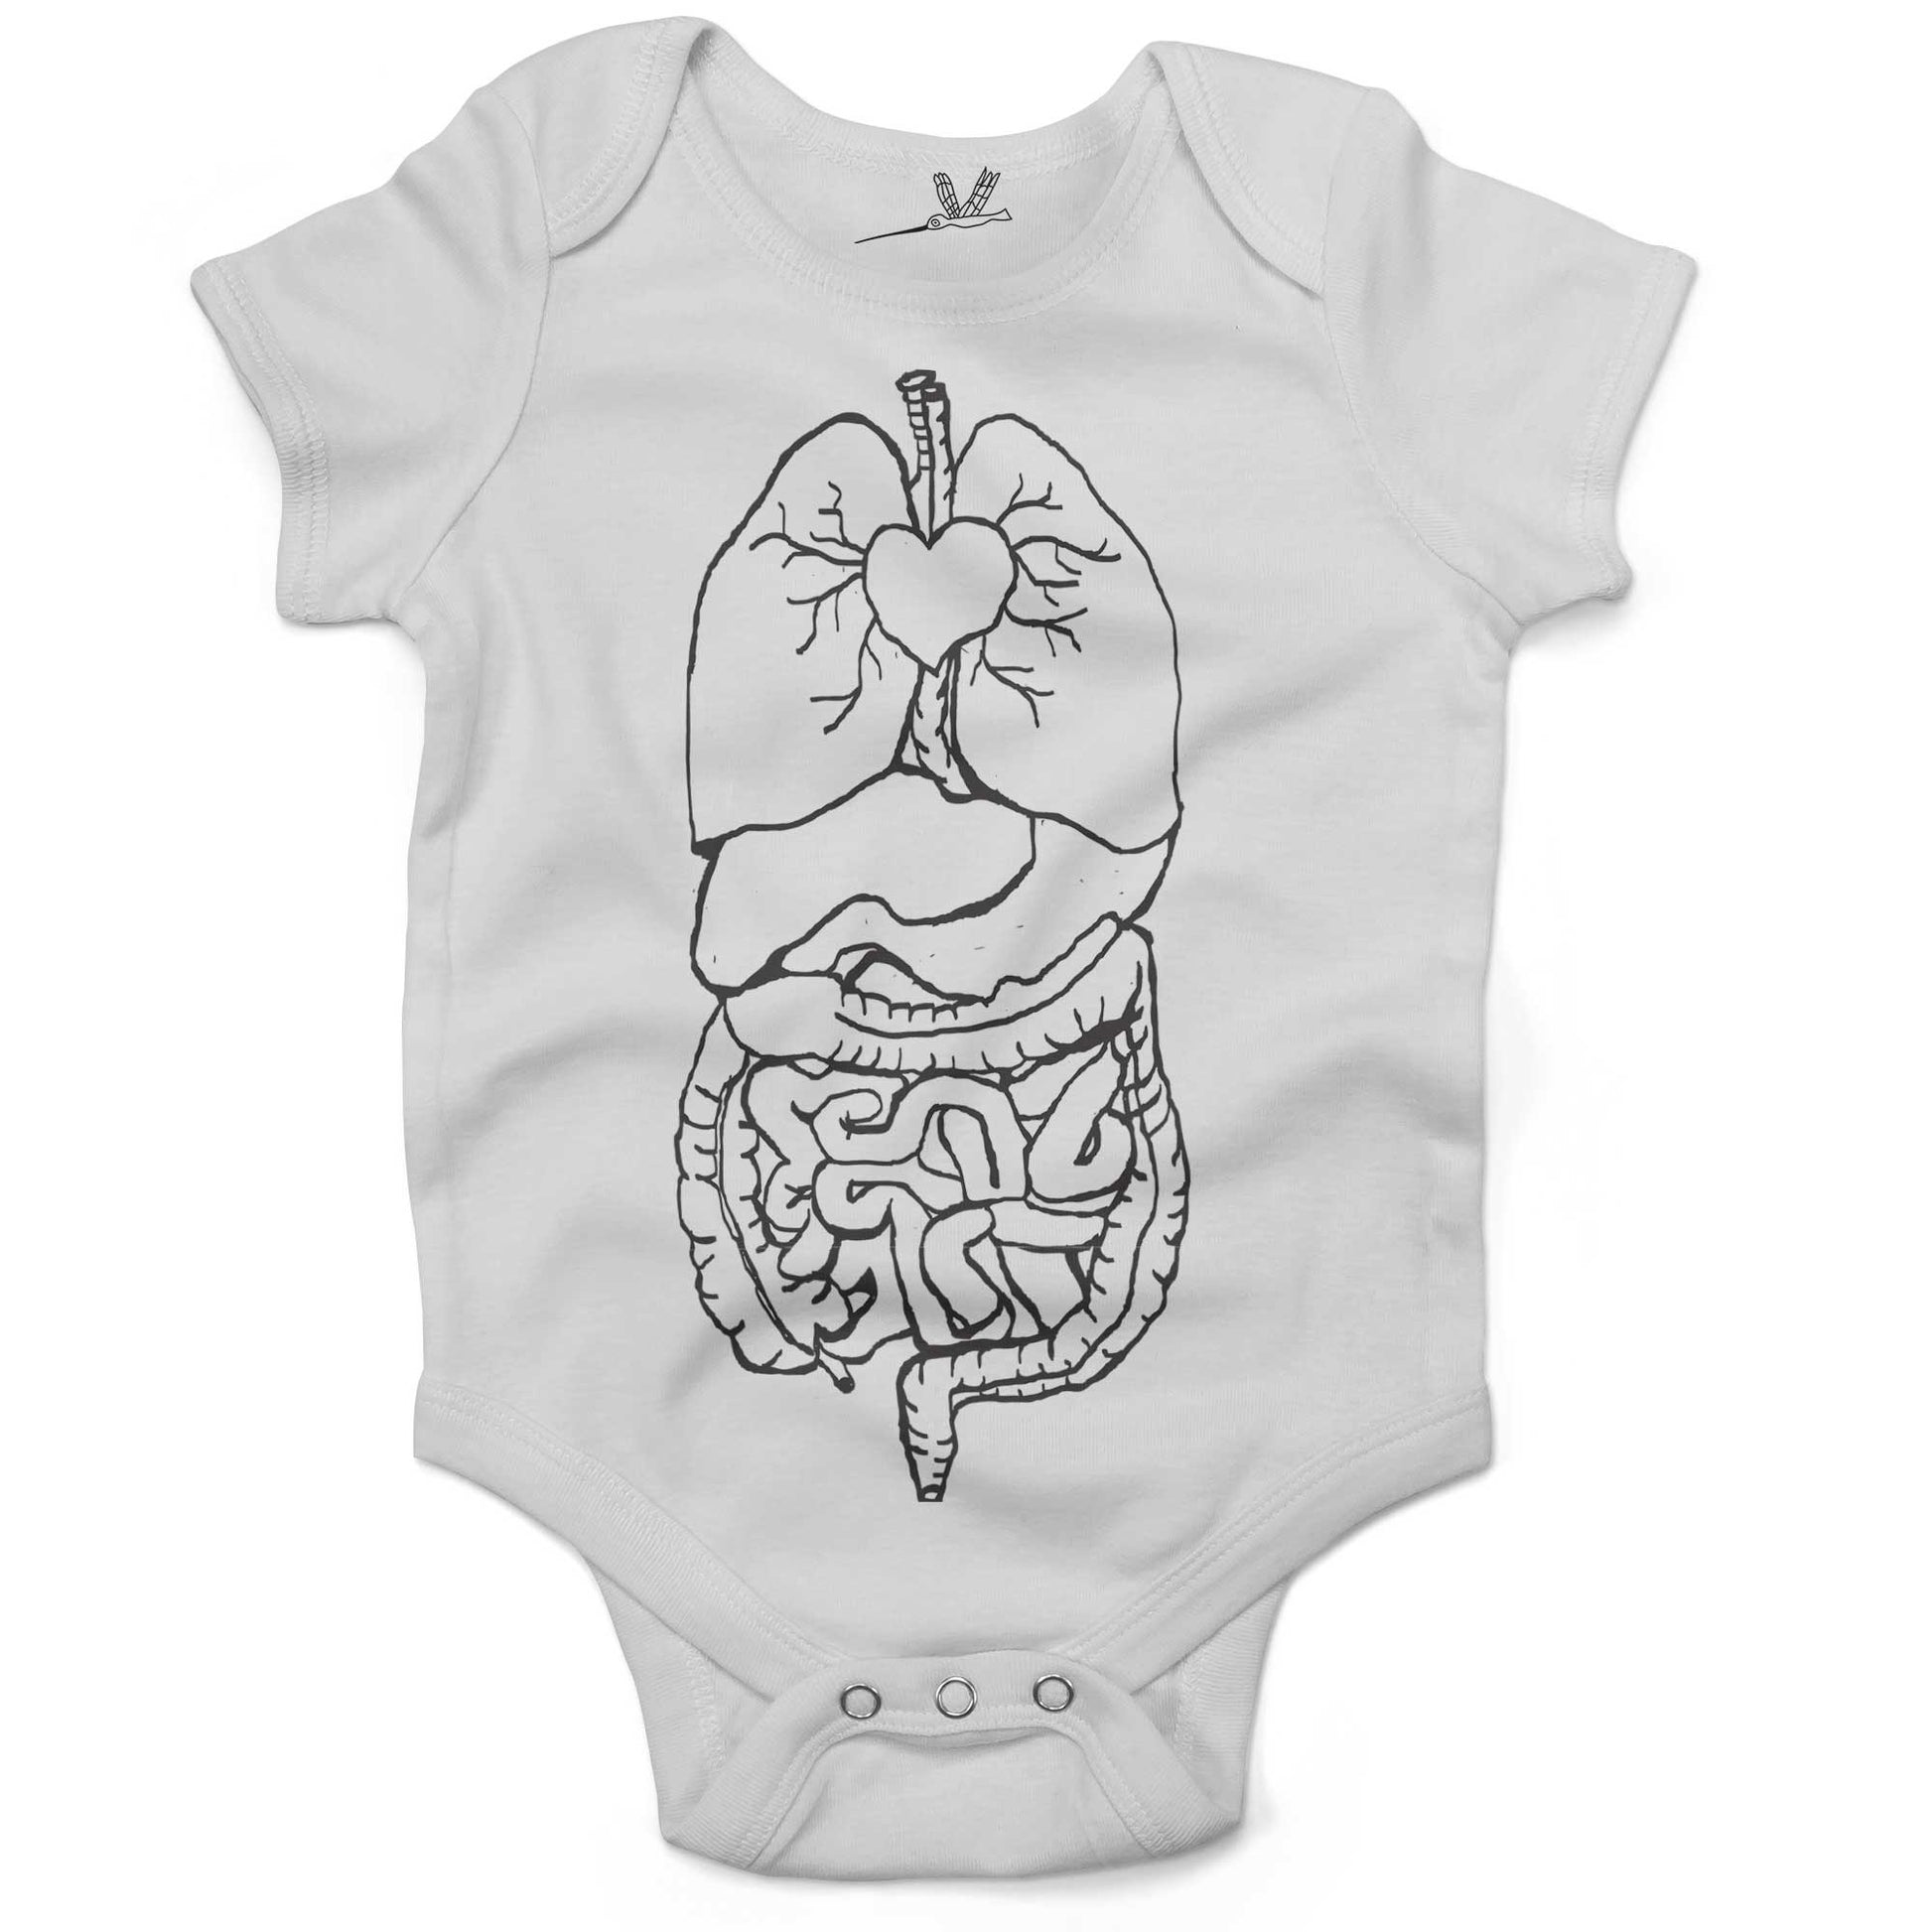 Digestive System Infant Bodysuit-White-3-6 months